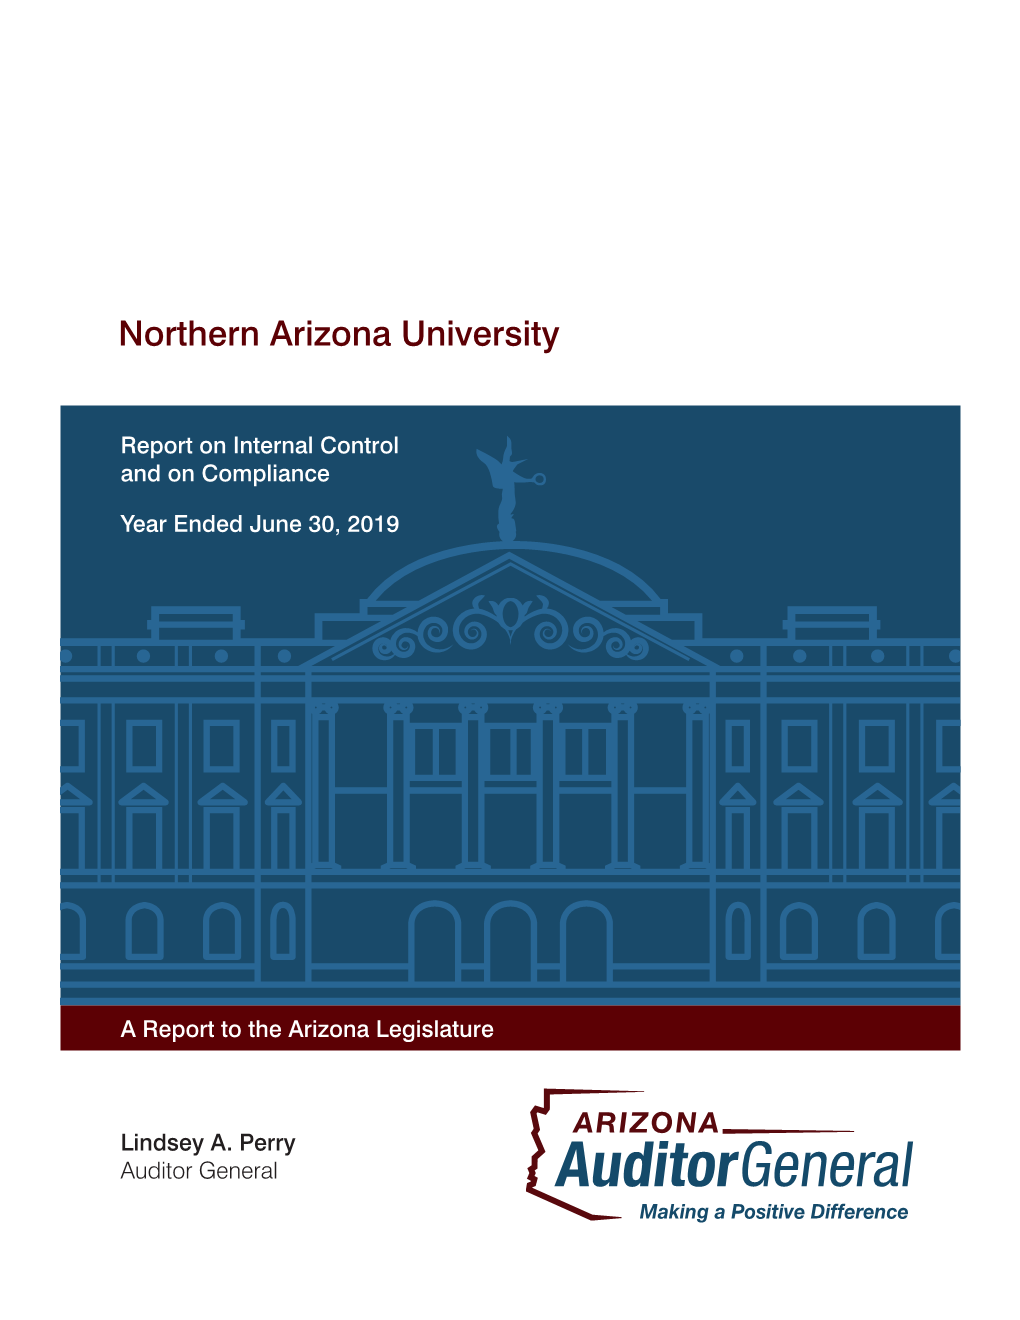 Northern Arizona University June 30, 2019 Report on Internal Control